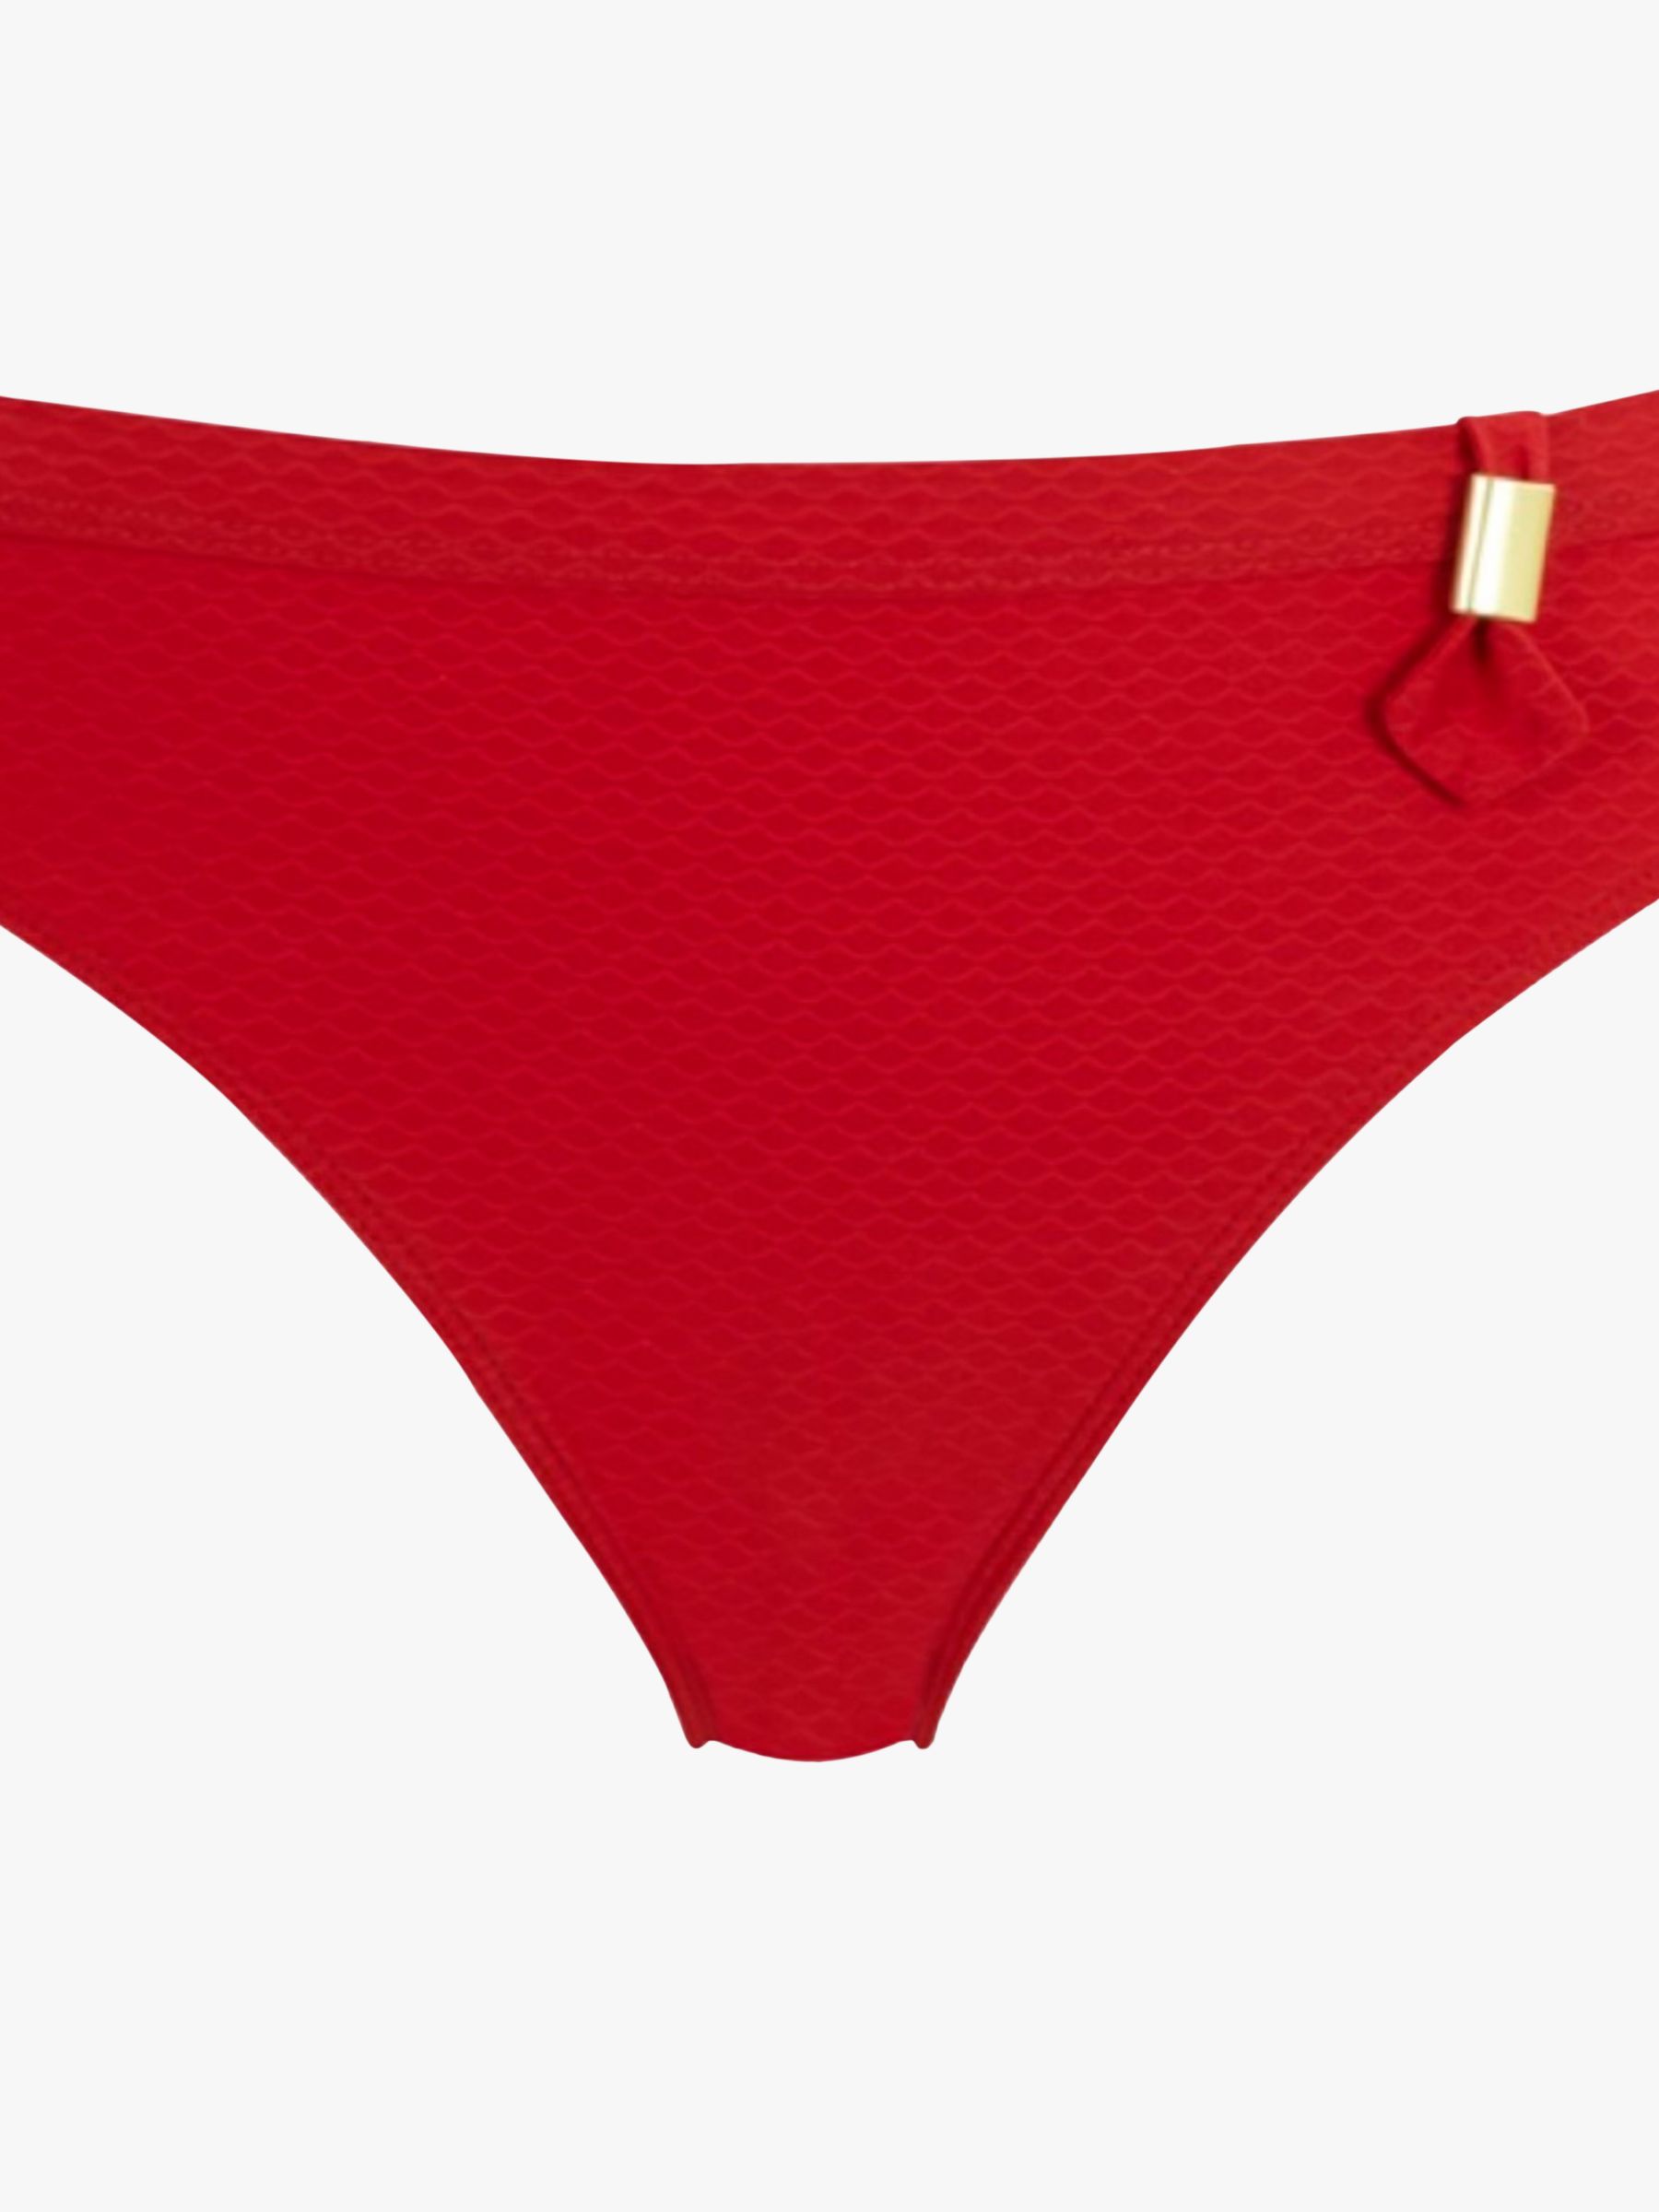 Panache Marianna Classic Bikini Bottoms, Crimson, 10